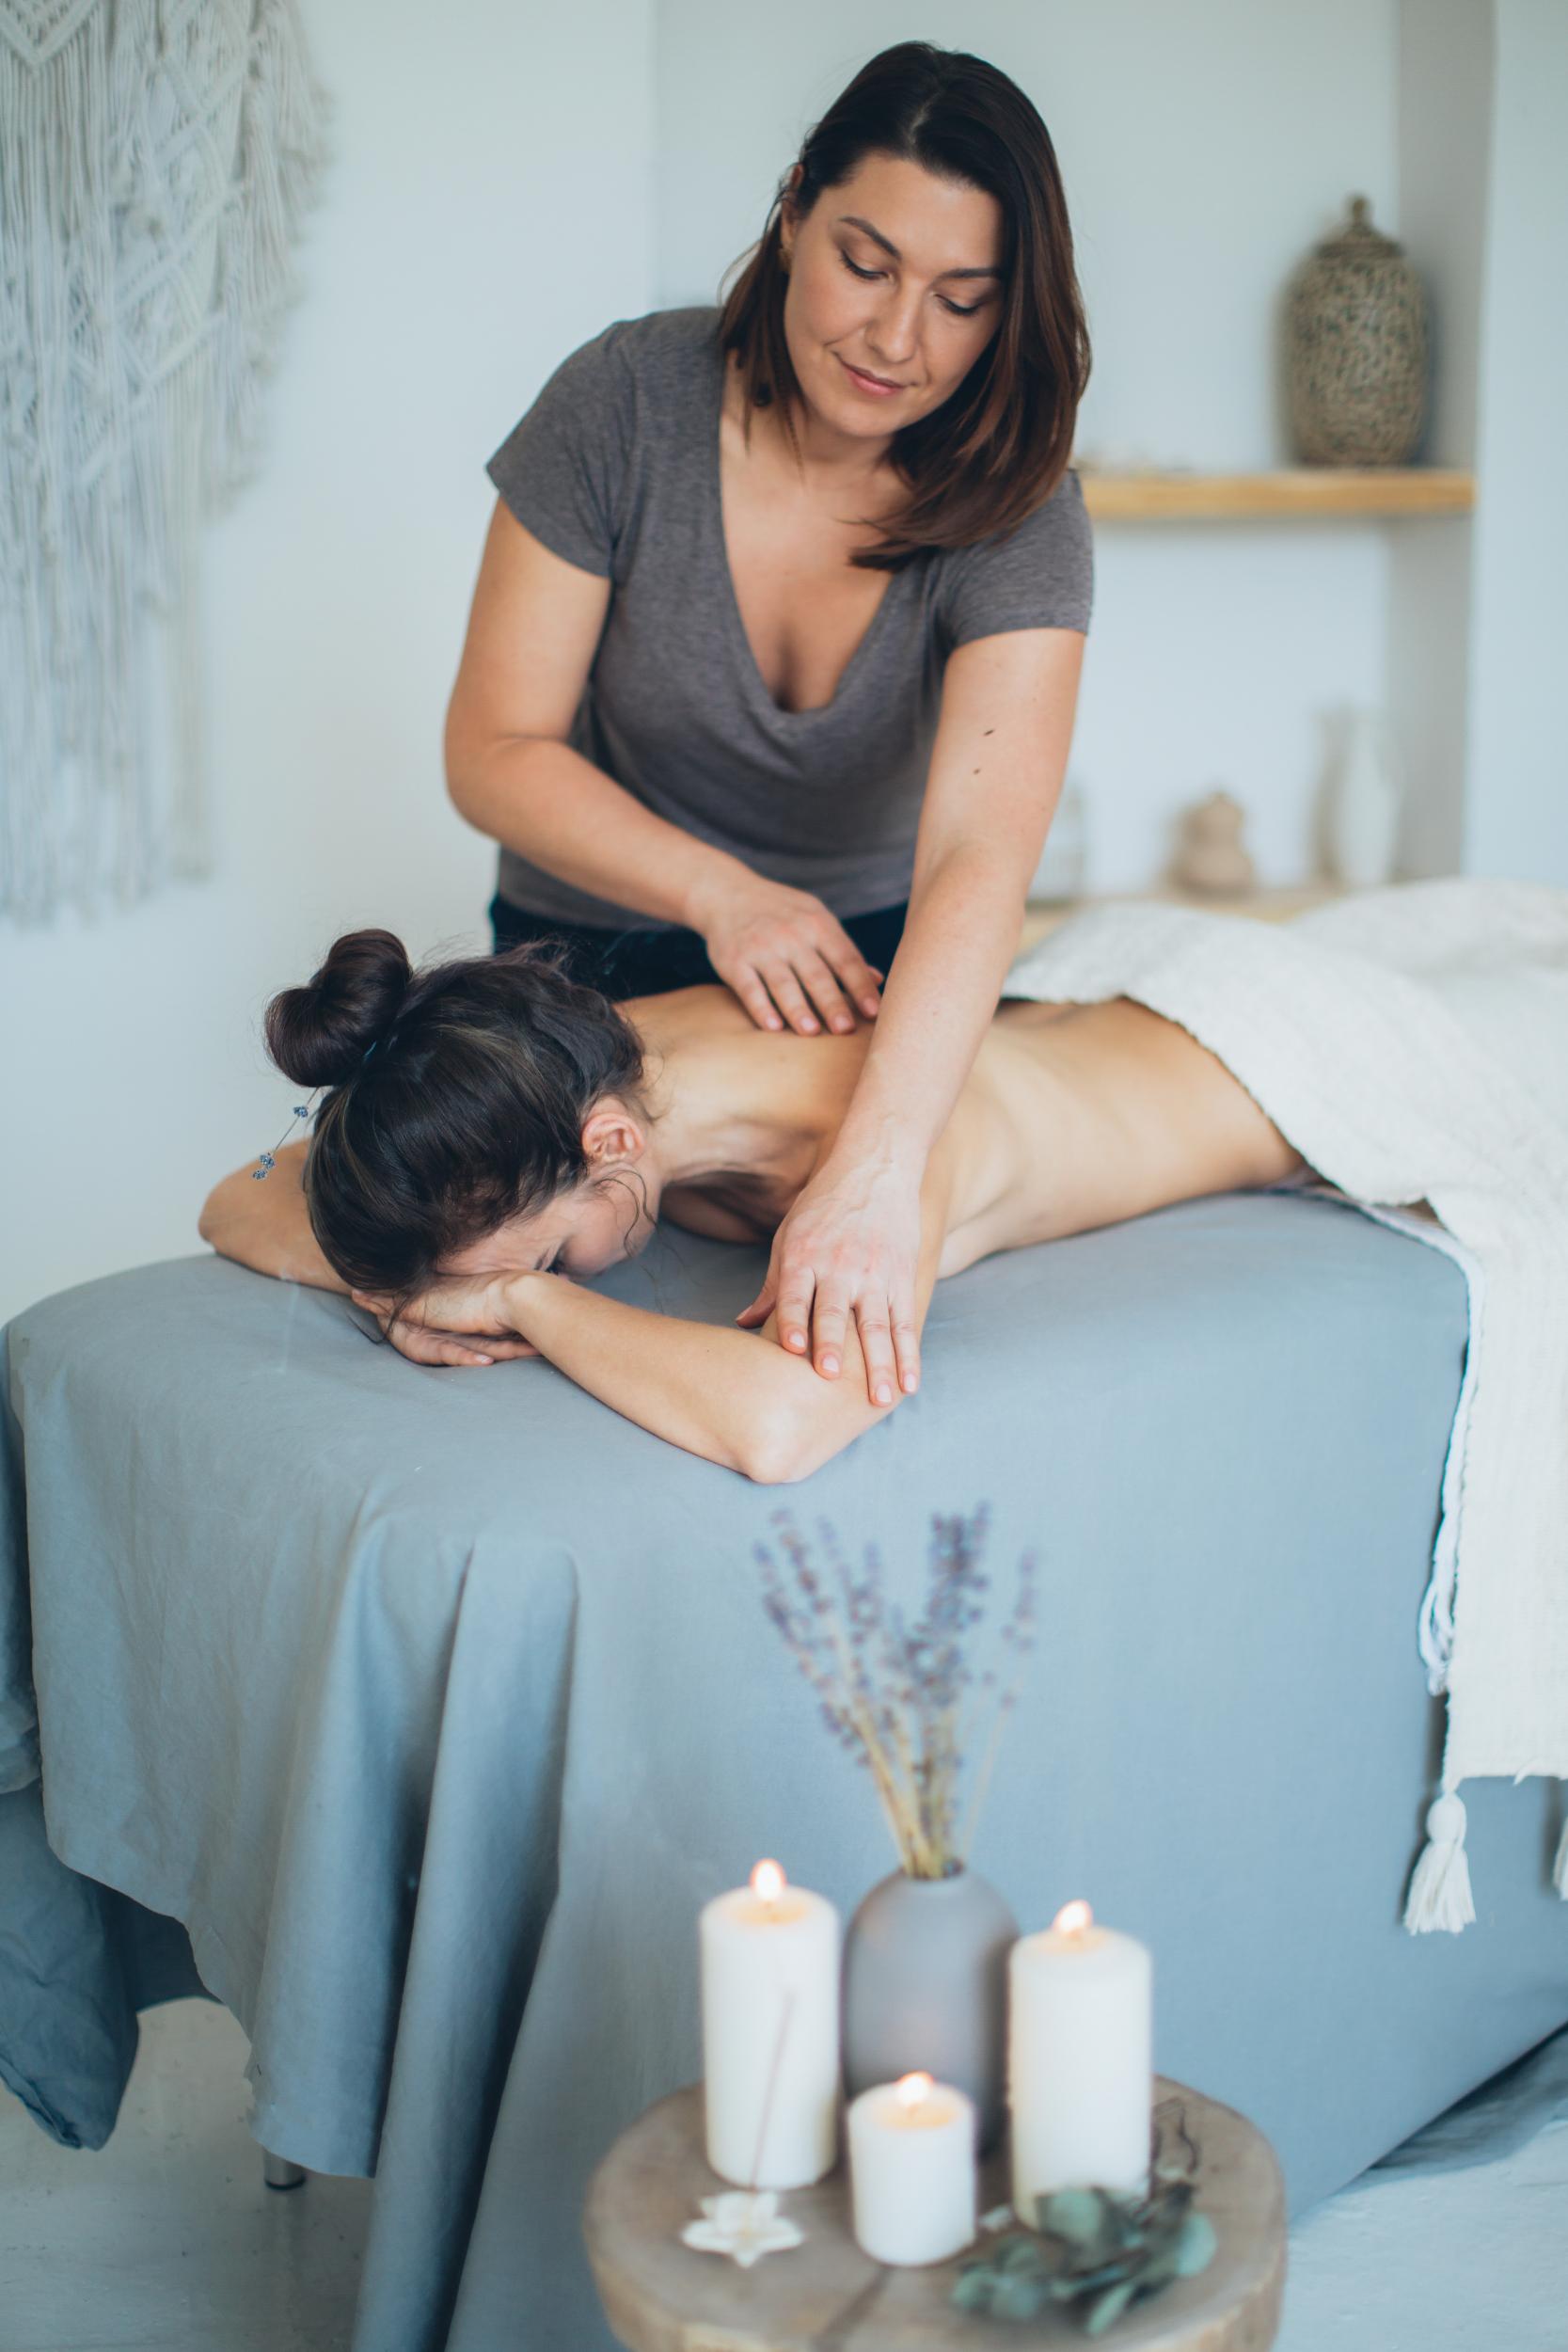 Therapeutic & Orthopedic Massage Therapist In Leduc, CA Offers Hot Stone Massage